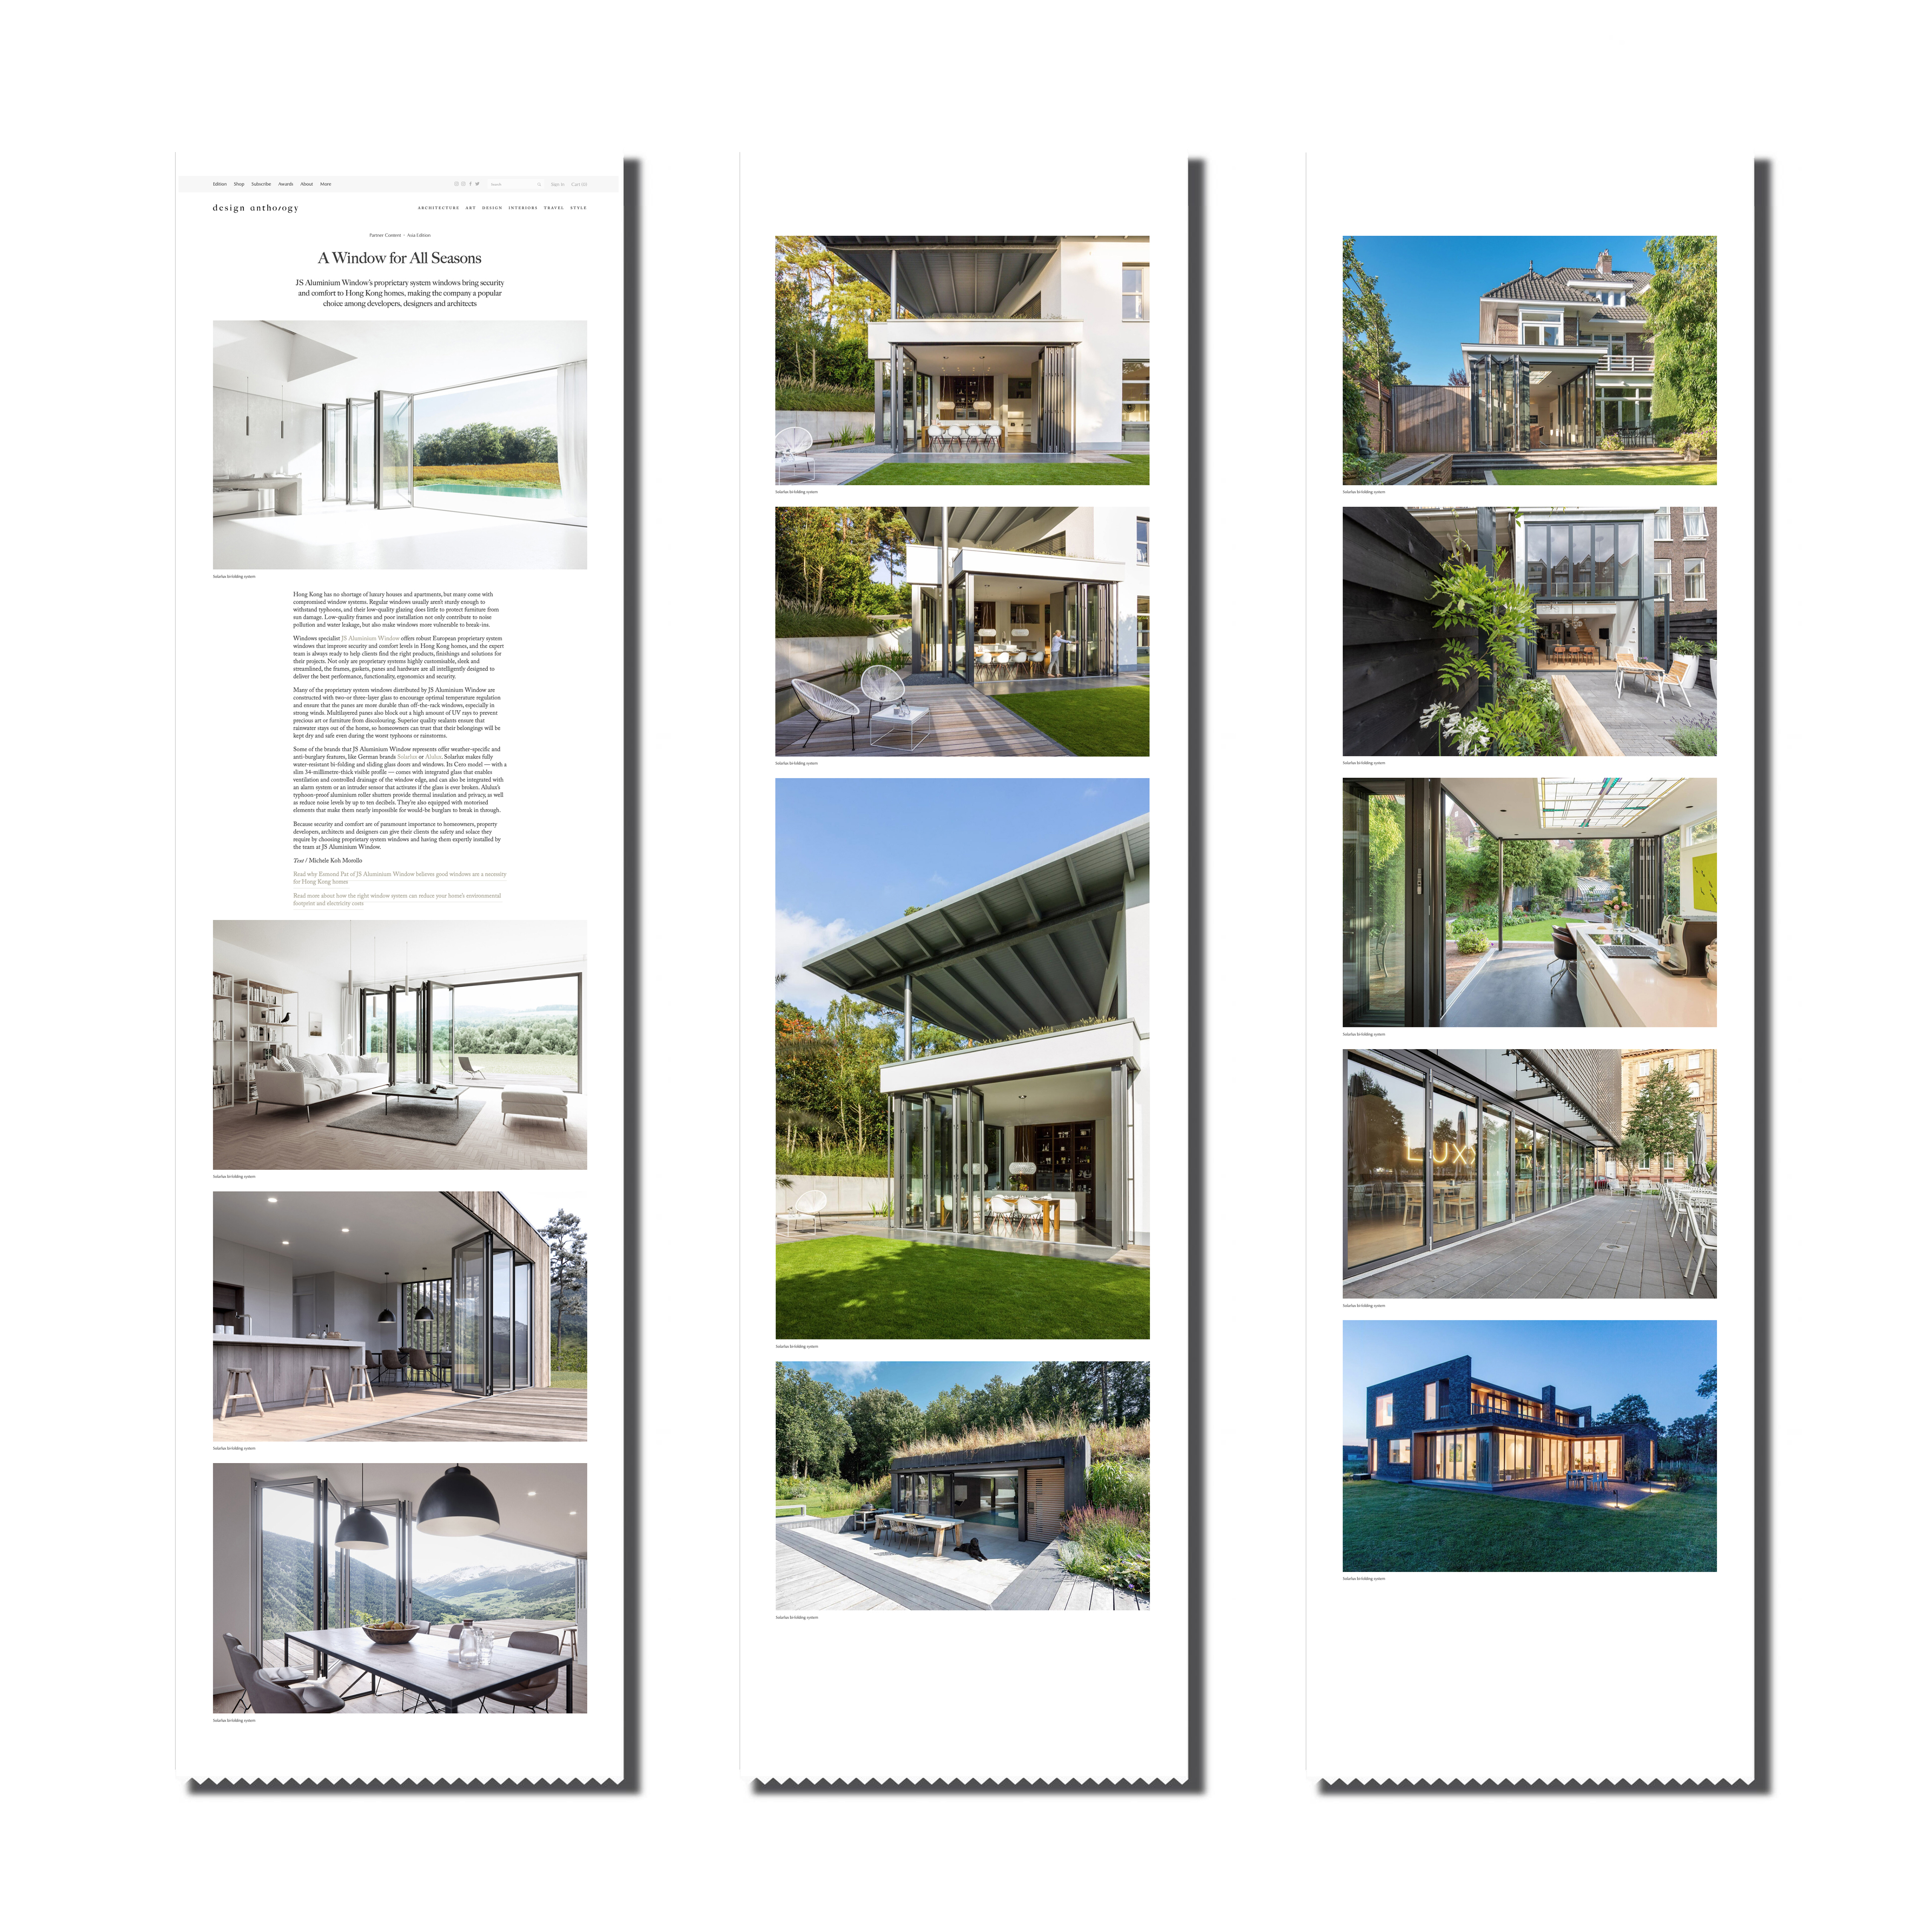 JS - Aluminium Windows in Hong Kong 高級歐洲鋁窗代理 - coverage on design anthology